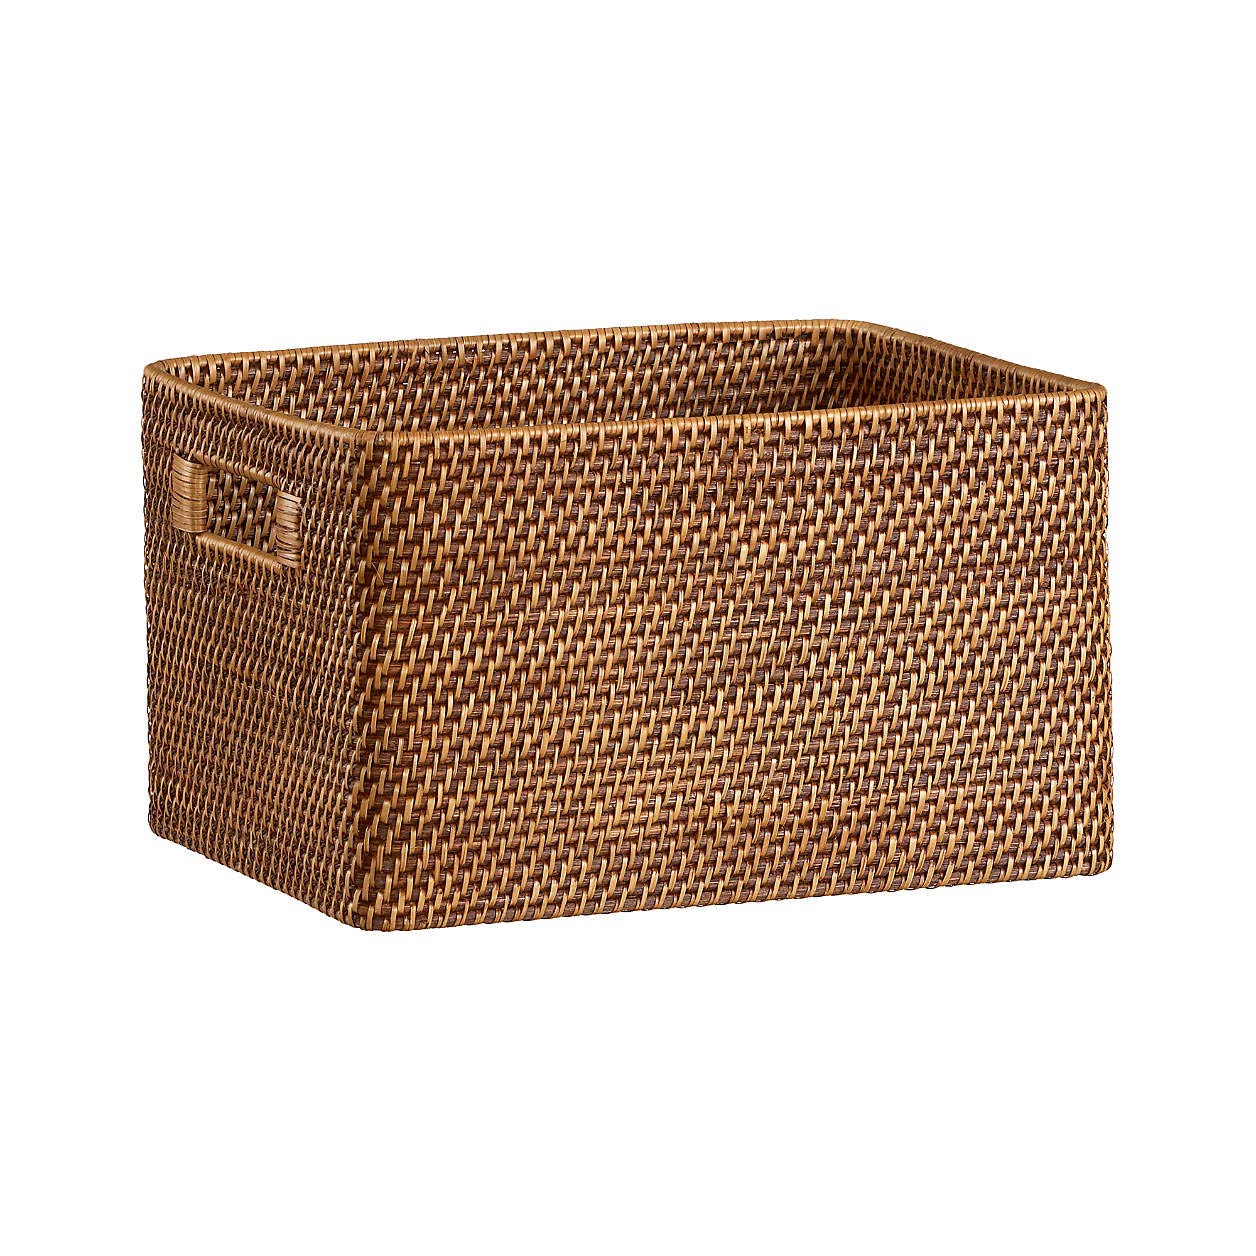 AKWAY Handmade Bamboo Wicker Basket Organizer for Cloth, Storage Basket (Beige, 14" x 11" x 8") Rattan,Pack of 1 - Akway